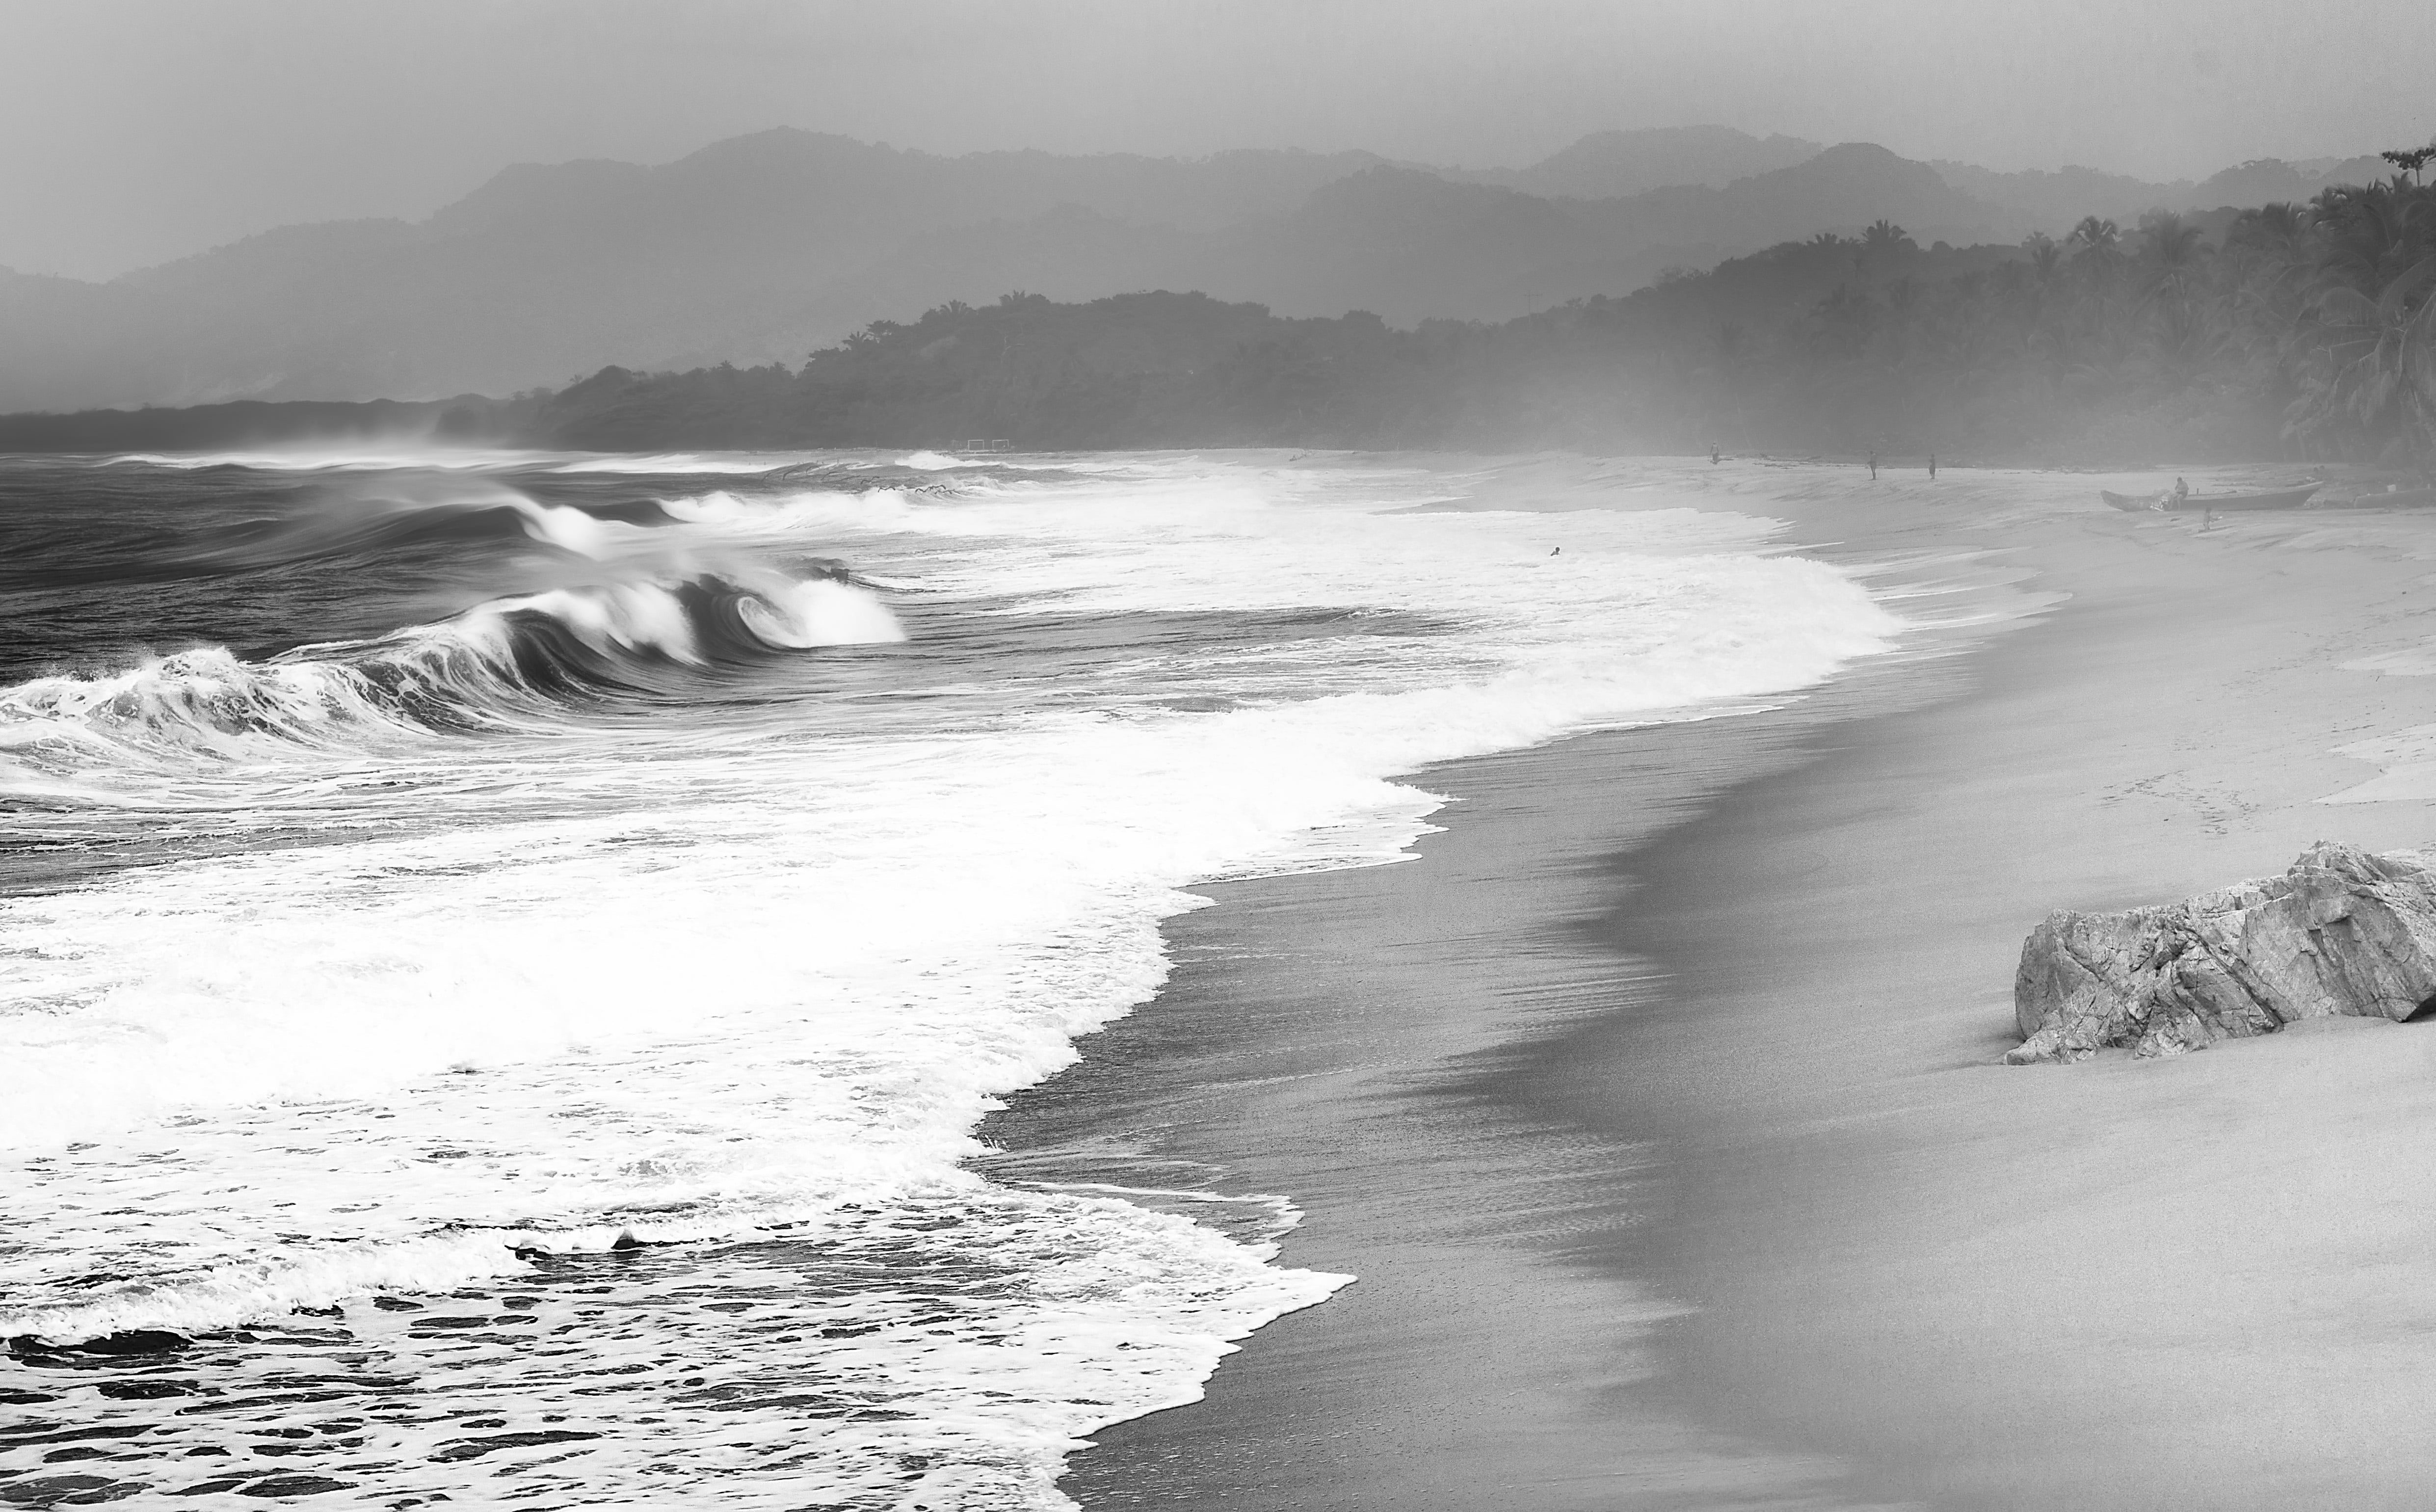 grayscale photo of beach, Mystic, bandw, mist, Santa marta, parque